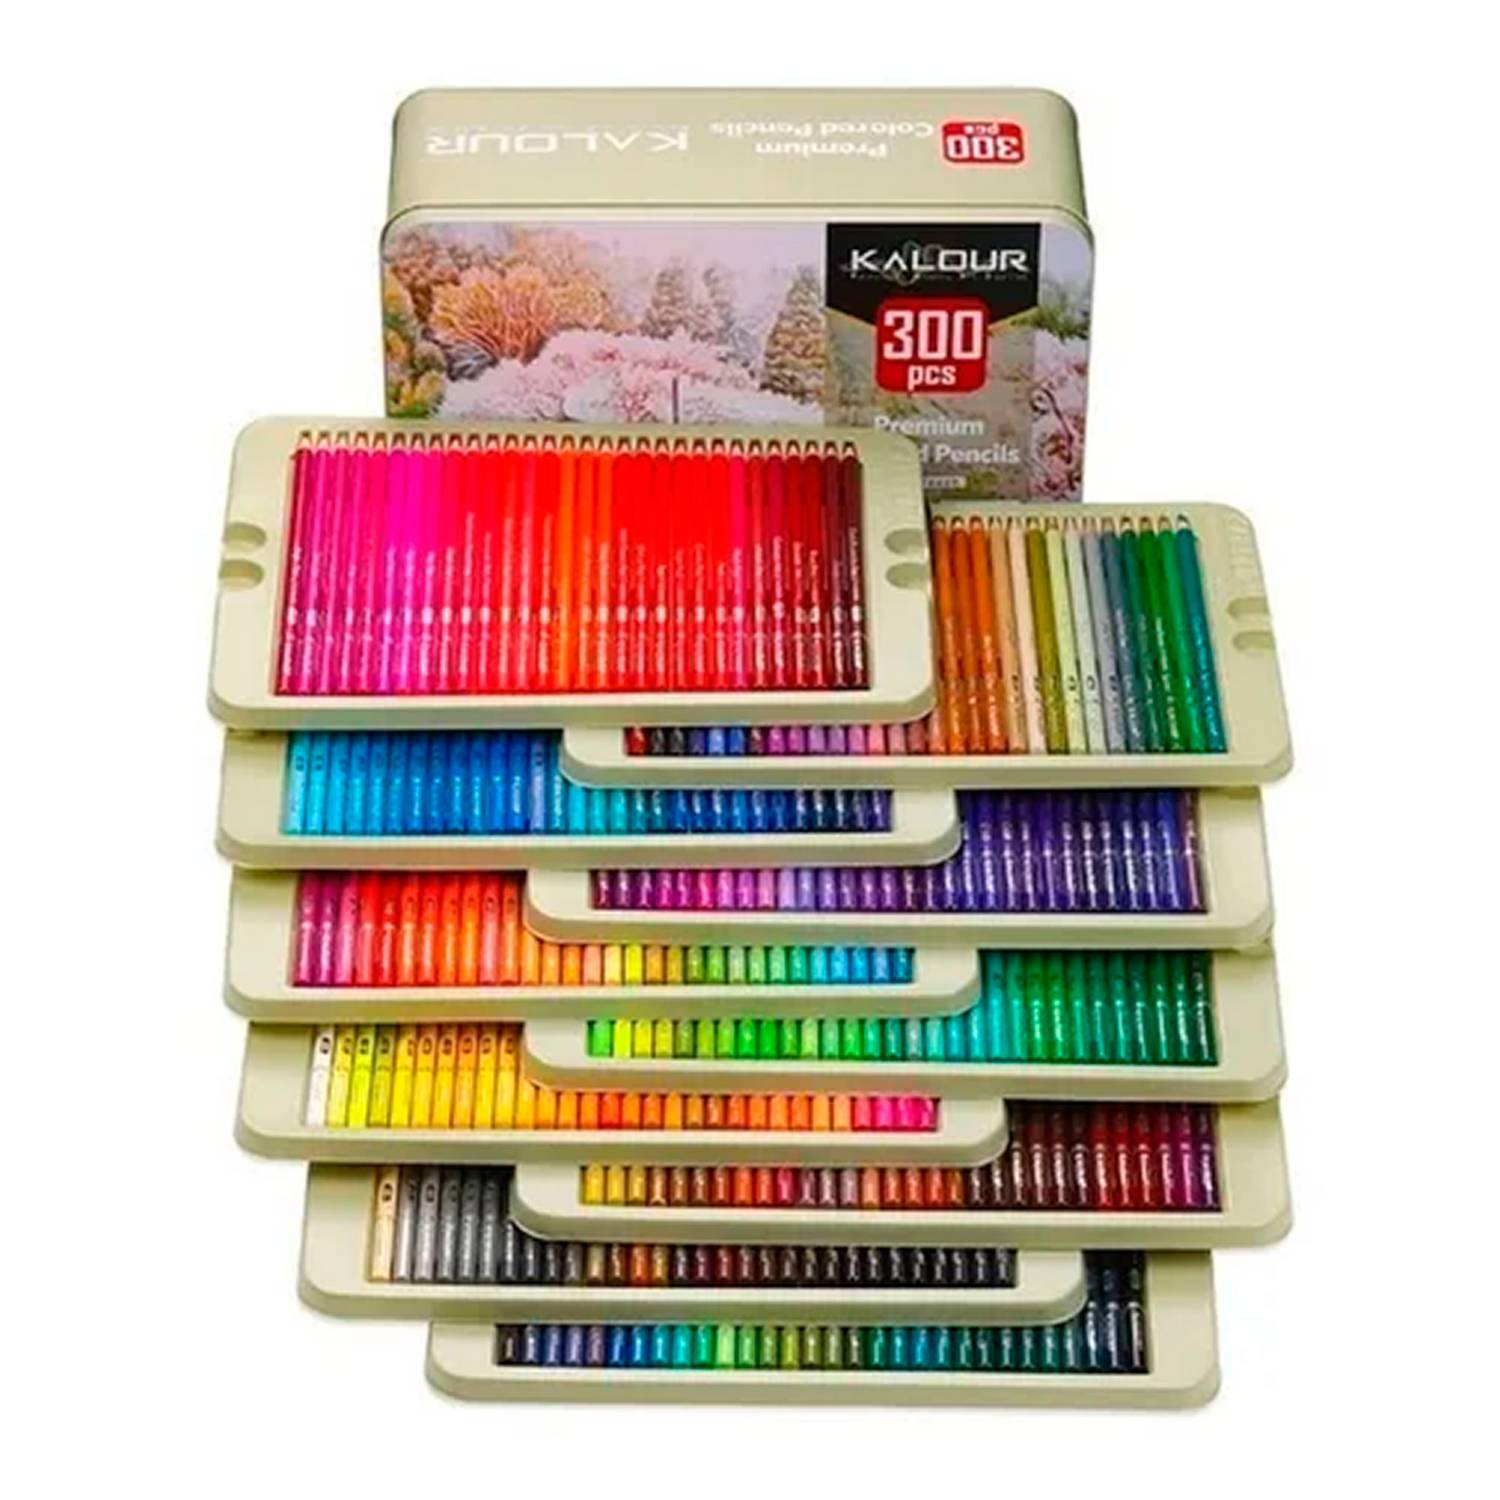 120 Lápices De Colores Set De Arte De Lápiz Profesional, Lápices De Colores